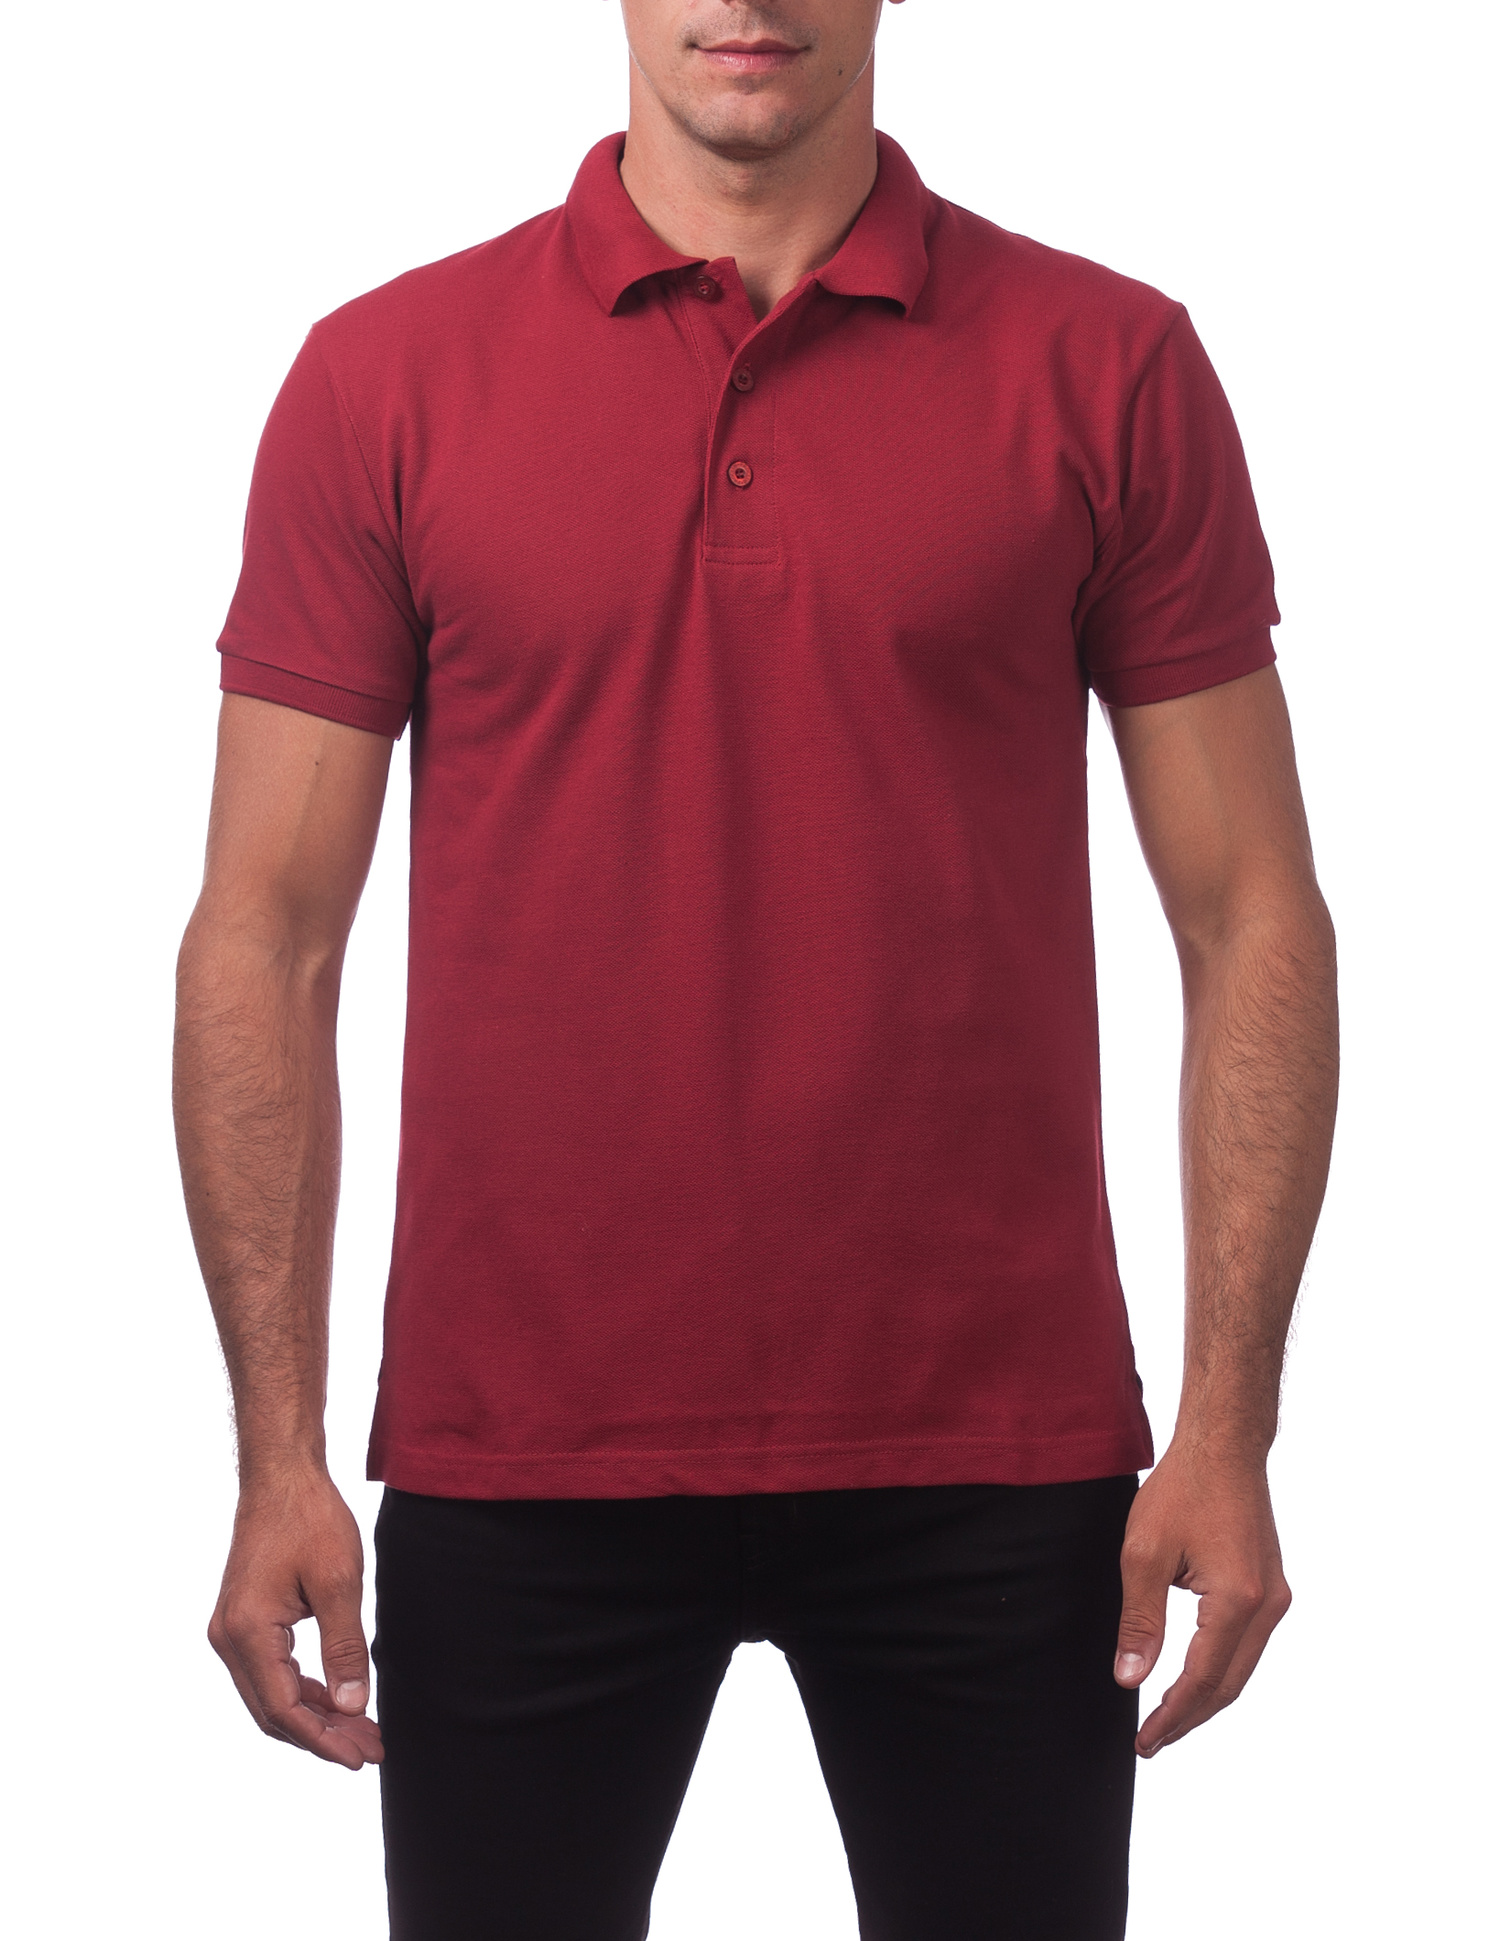 121 BURGUNDY Pique Polo Cotton Short Sleeve Shirt - Short Sleeve Tee